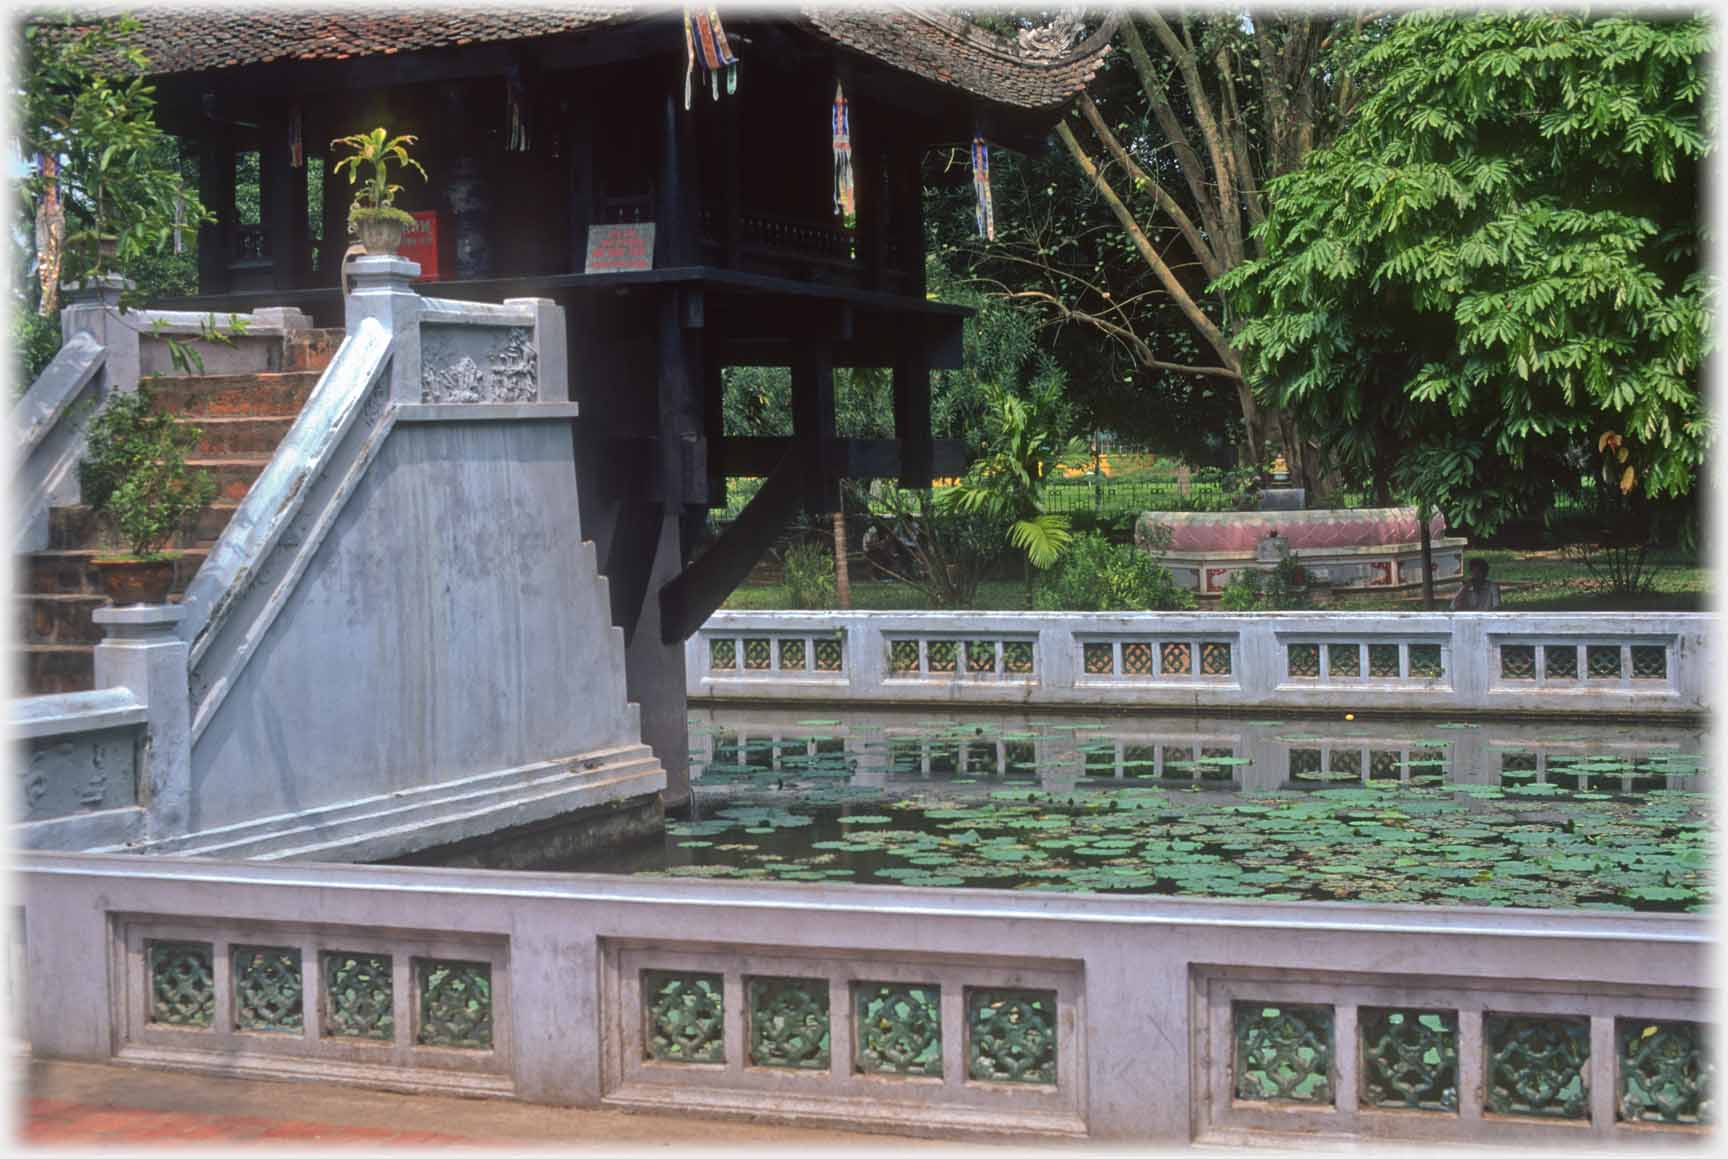 Steps and pagoda with pool and trees beyond.